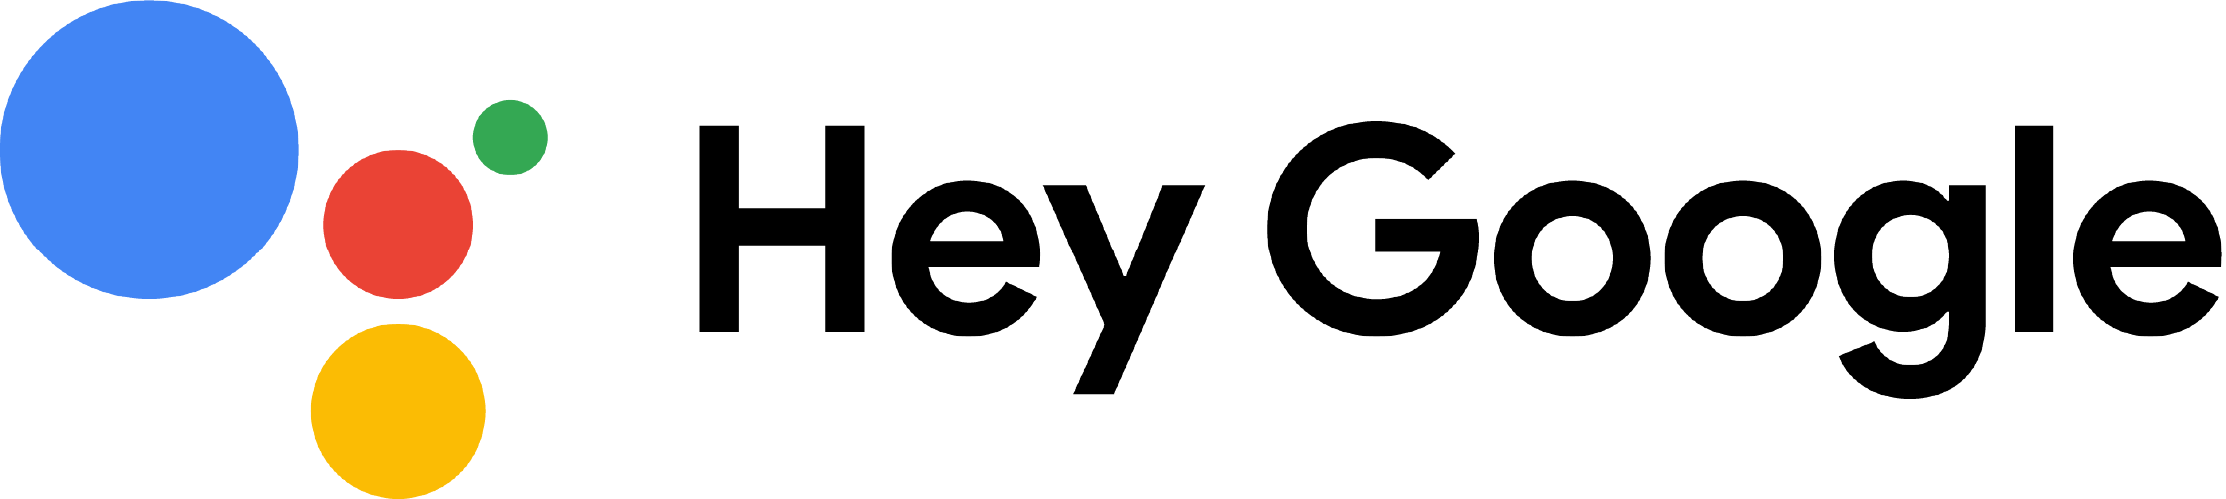 Heygoogle logo